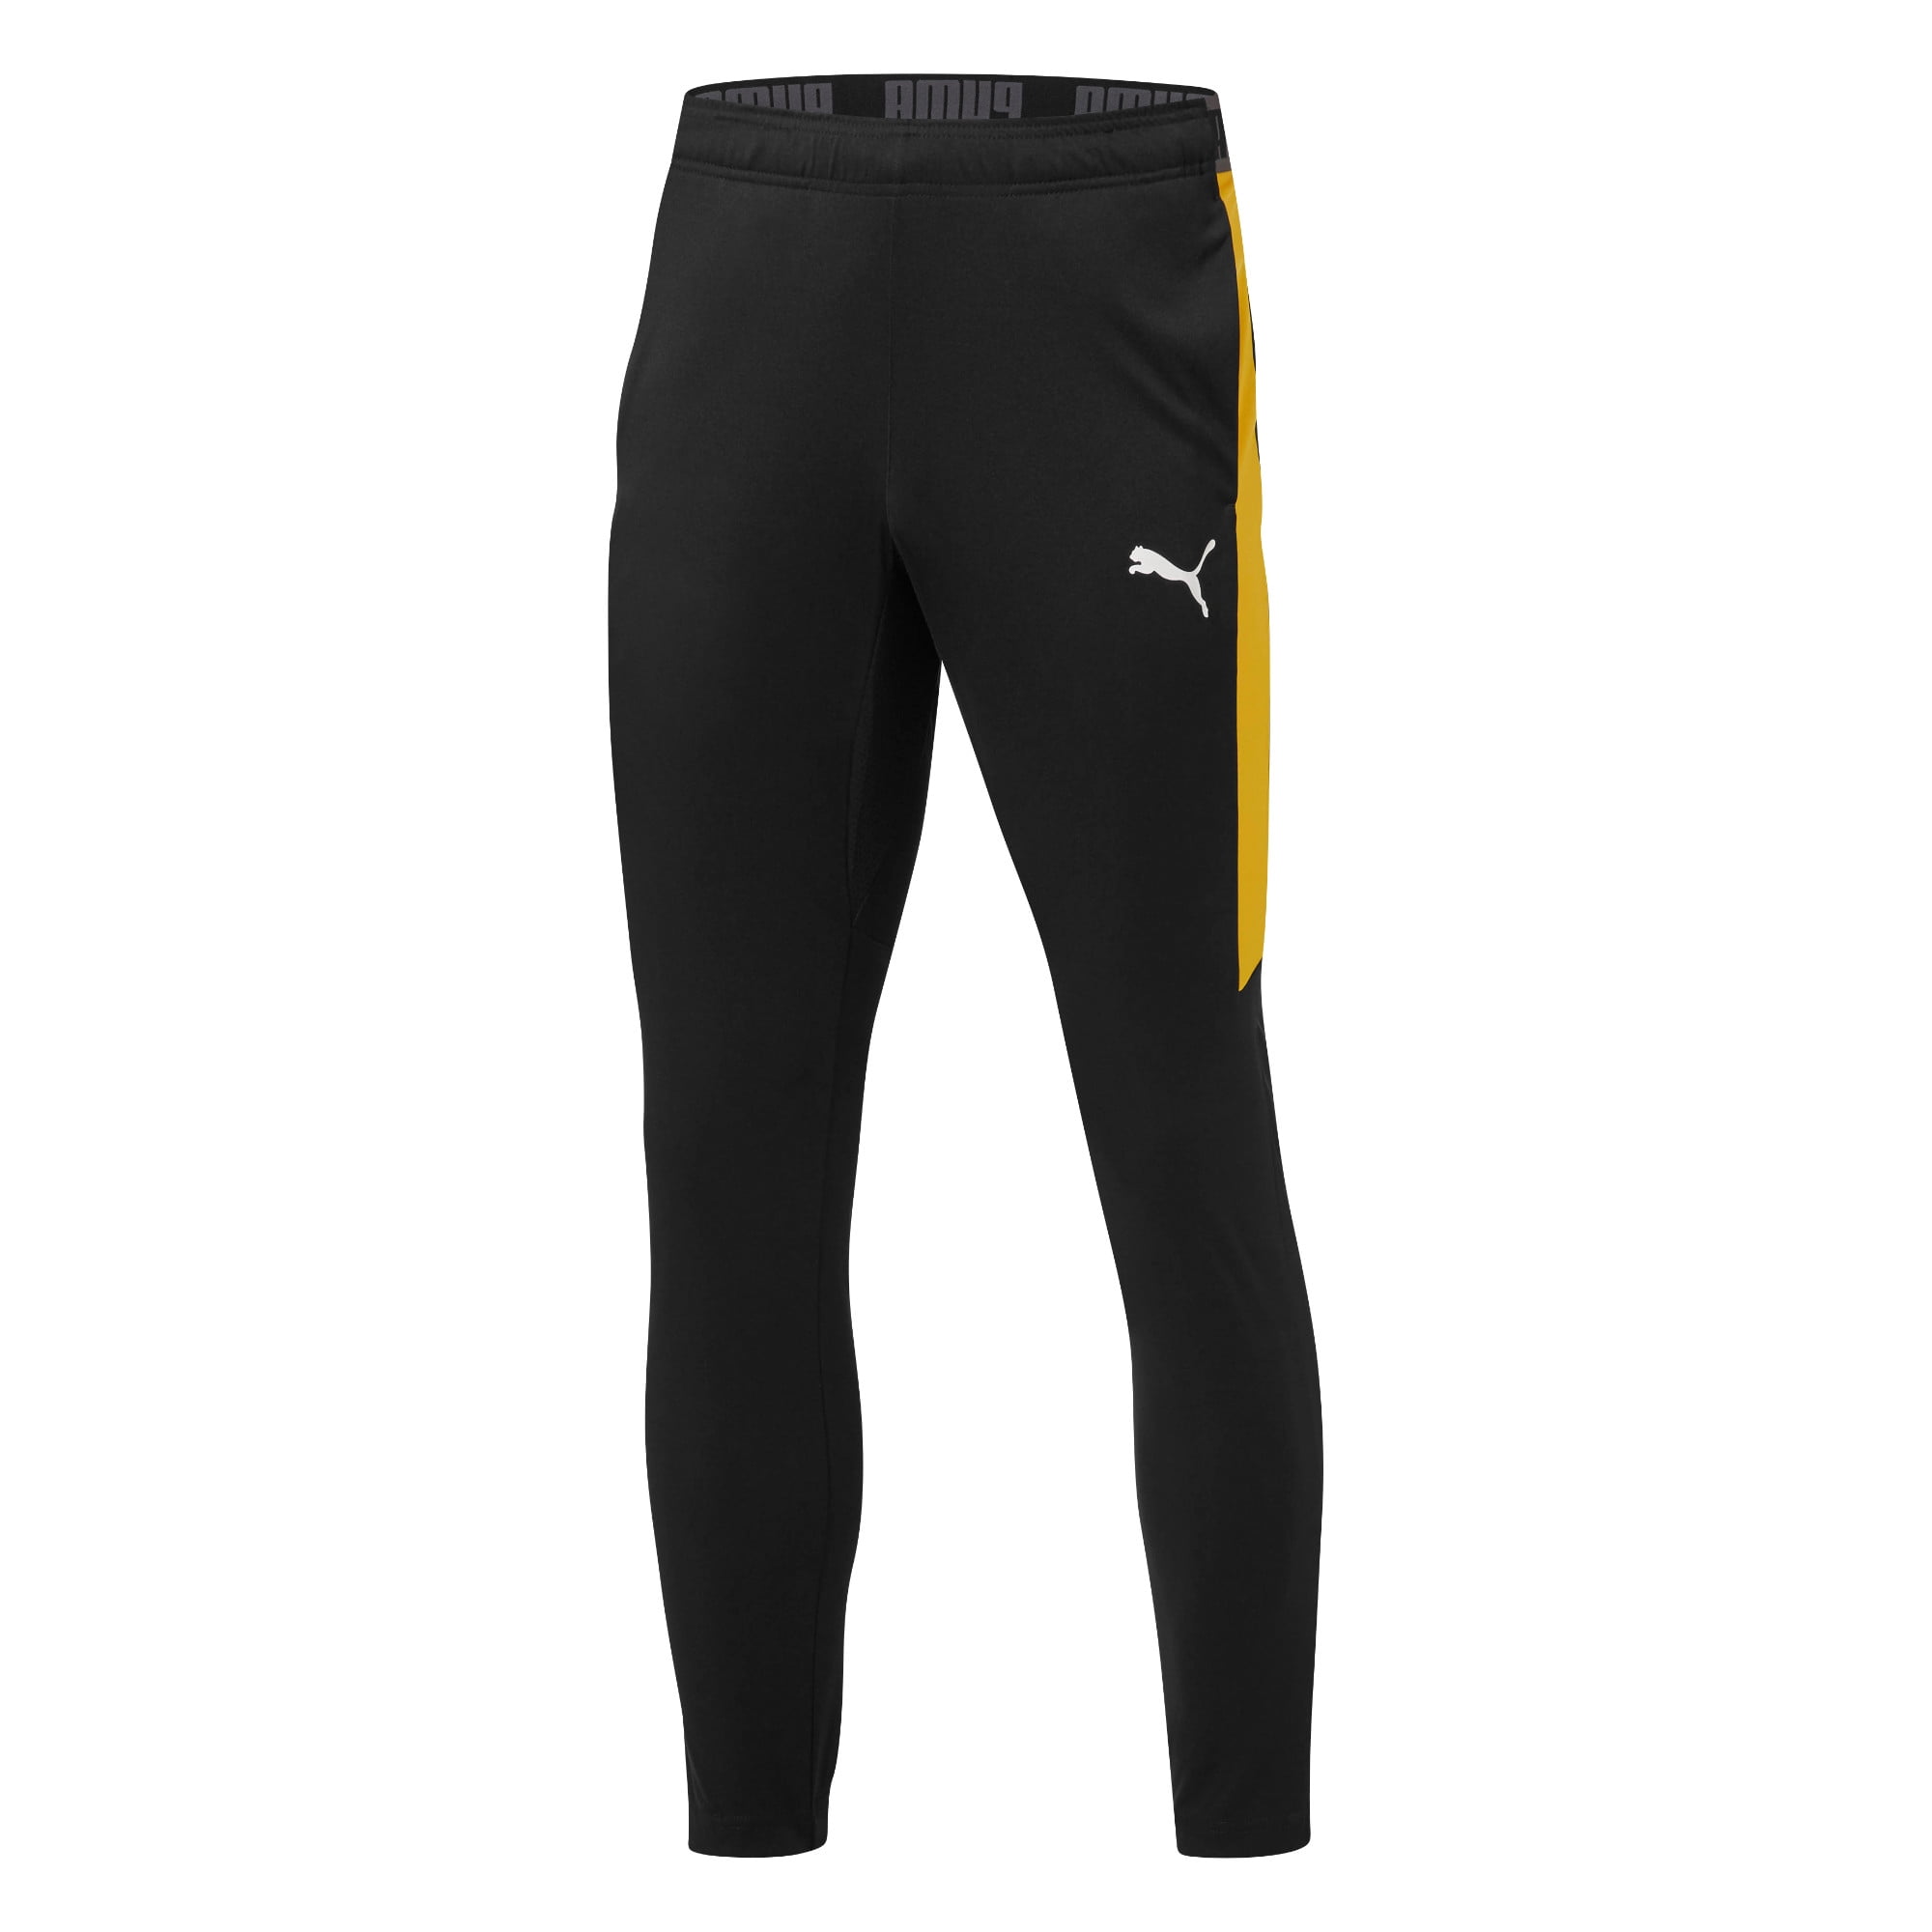 Puma Men's Speed Training Pants Black-Spectra Yellow 656299-02